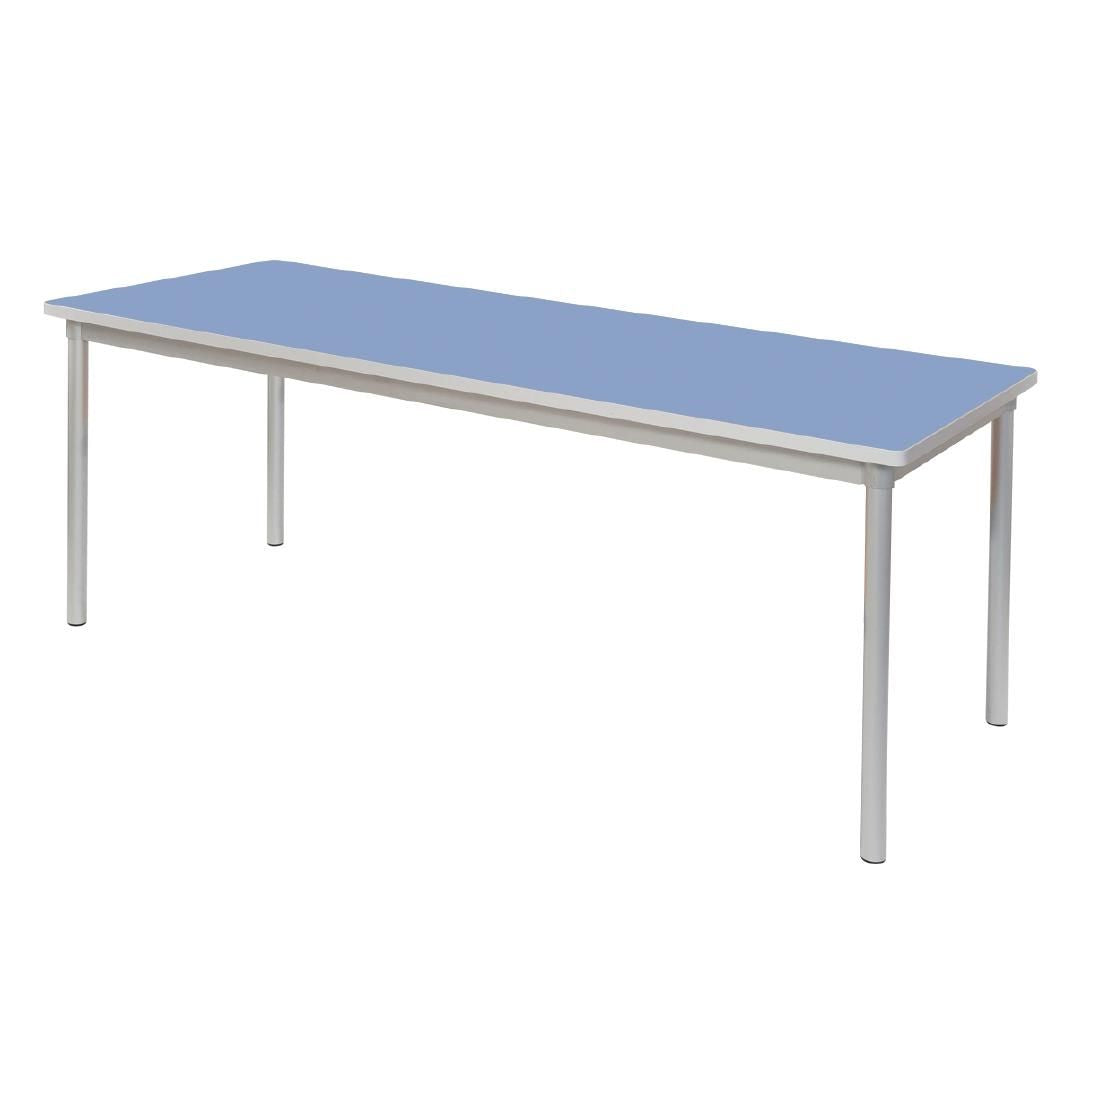 Gopak Enviro Indoor Campanula Blue Rectangle Dining Table 1800mm JD Catering Equipment Solutions Ltd